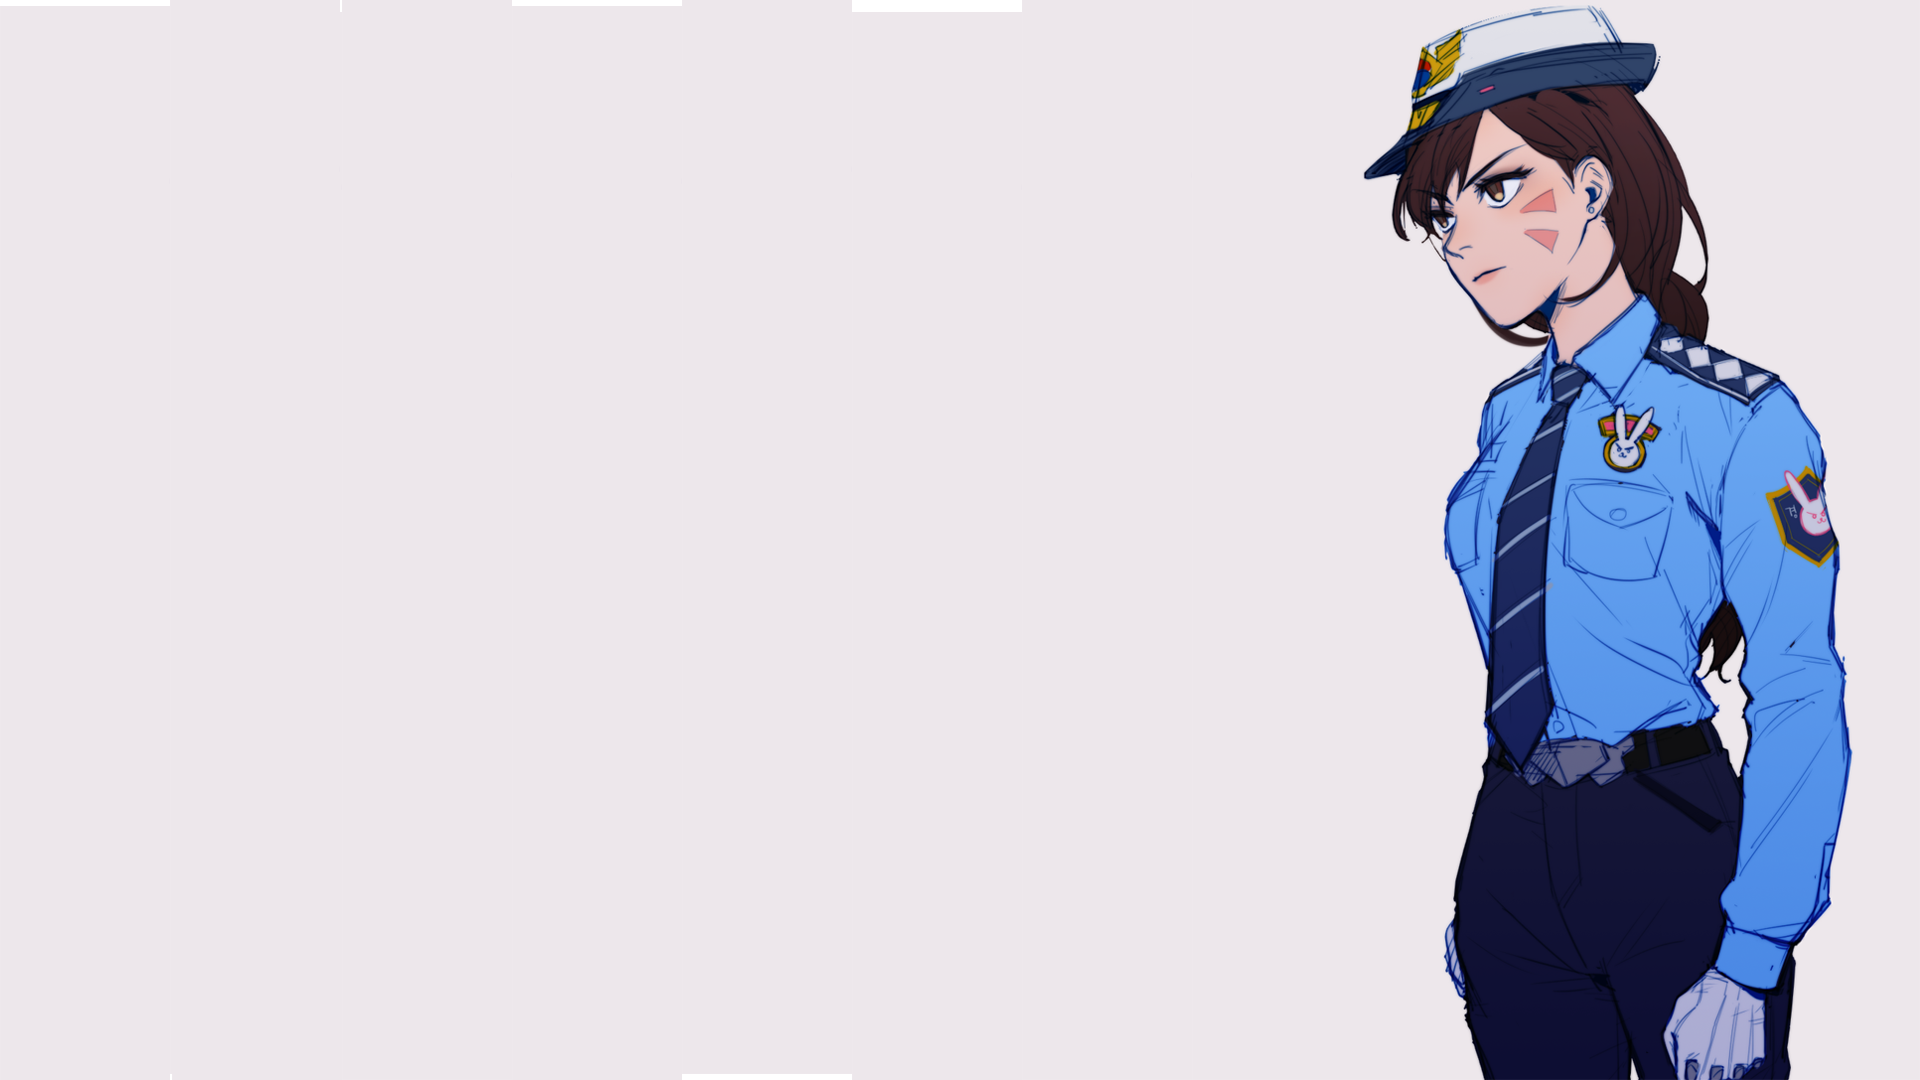 Anime 1920x1080 D.Va (Overwatch) Overwatch anime girls anime police women uniform tie hat simple background